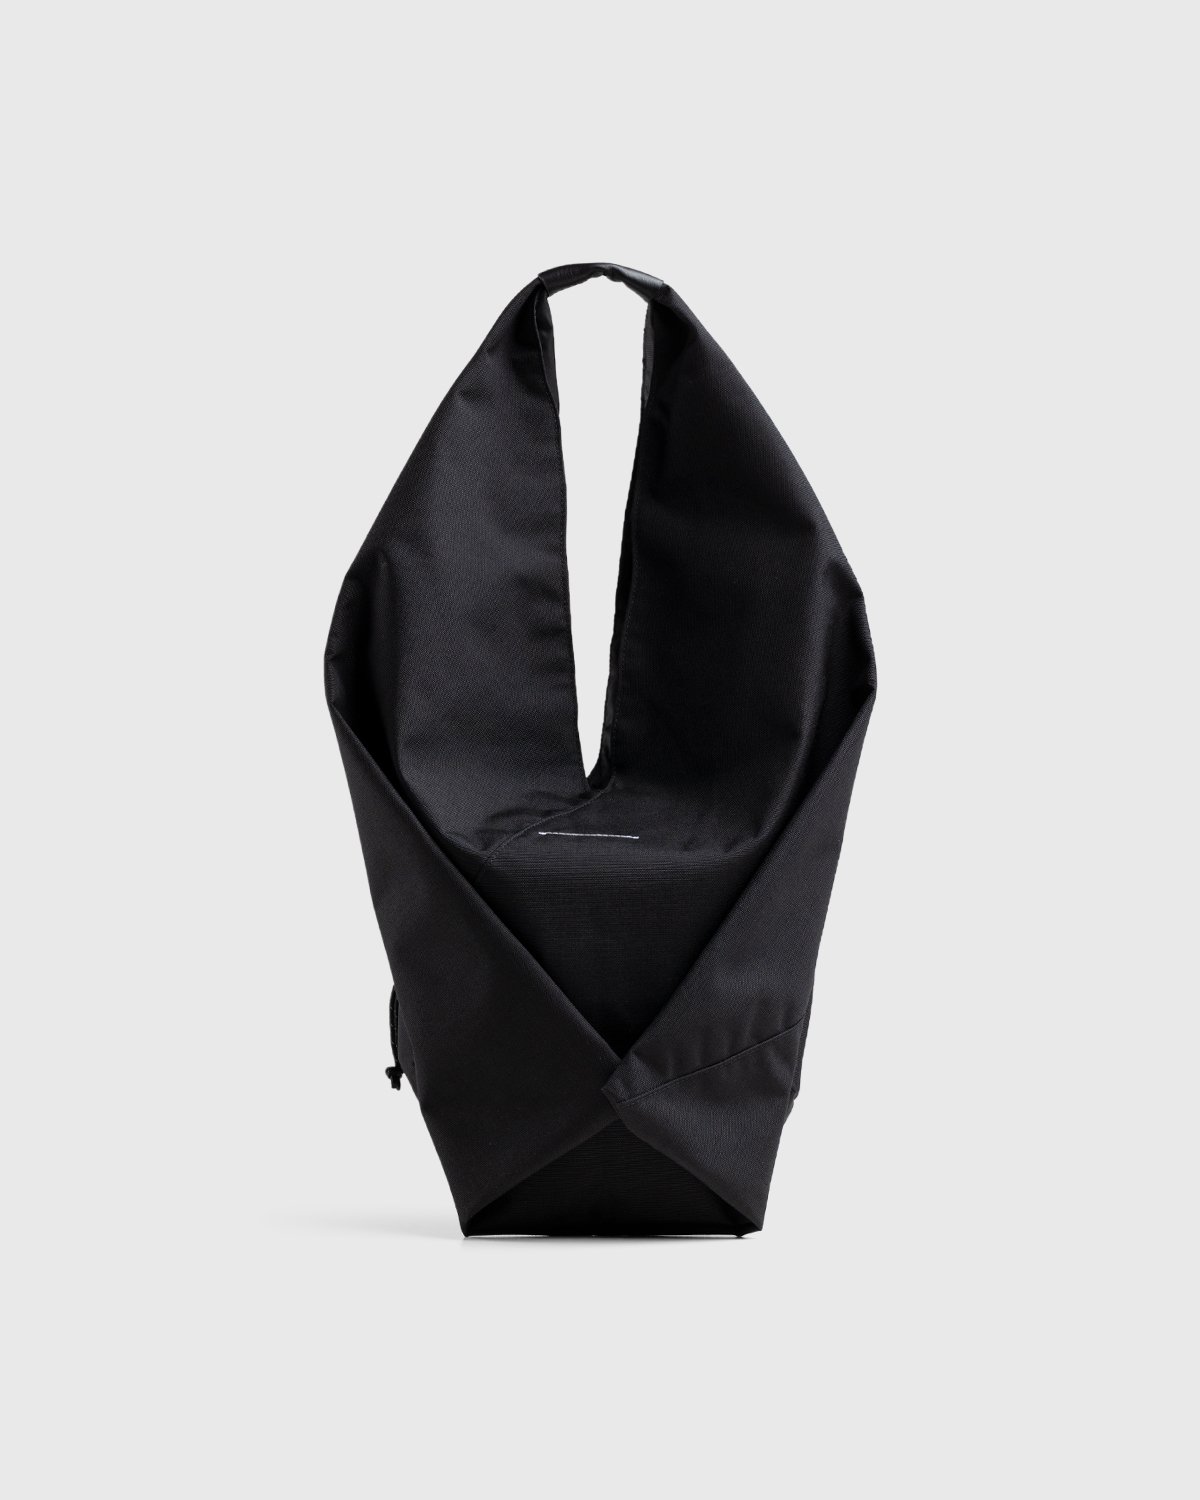 MM6 Maison Margiela x Eastpak - Borsa Shopping Bag Black - Accessories - Black - Image 3